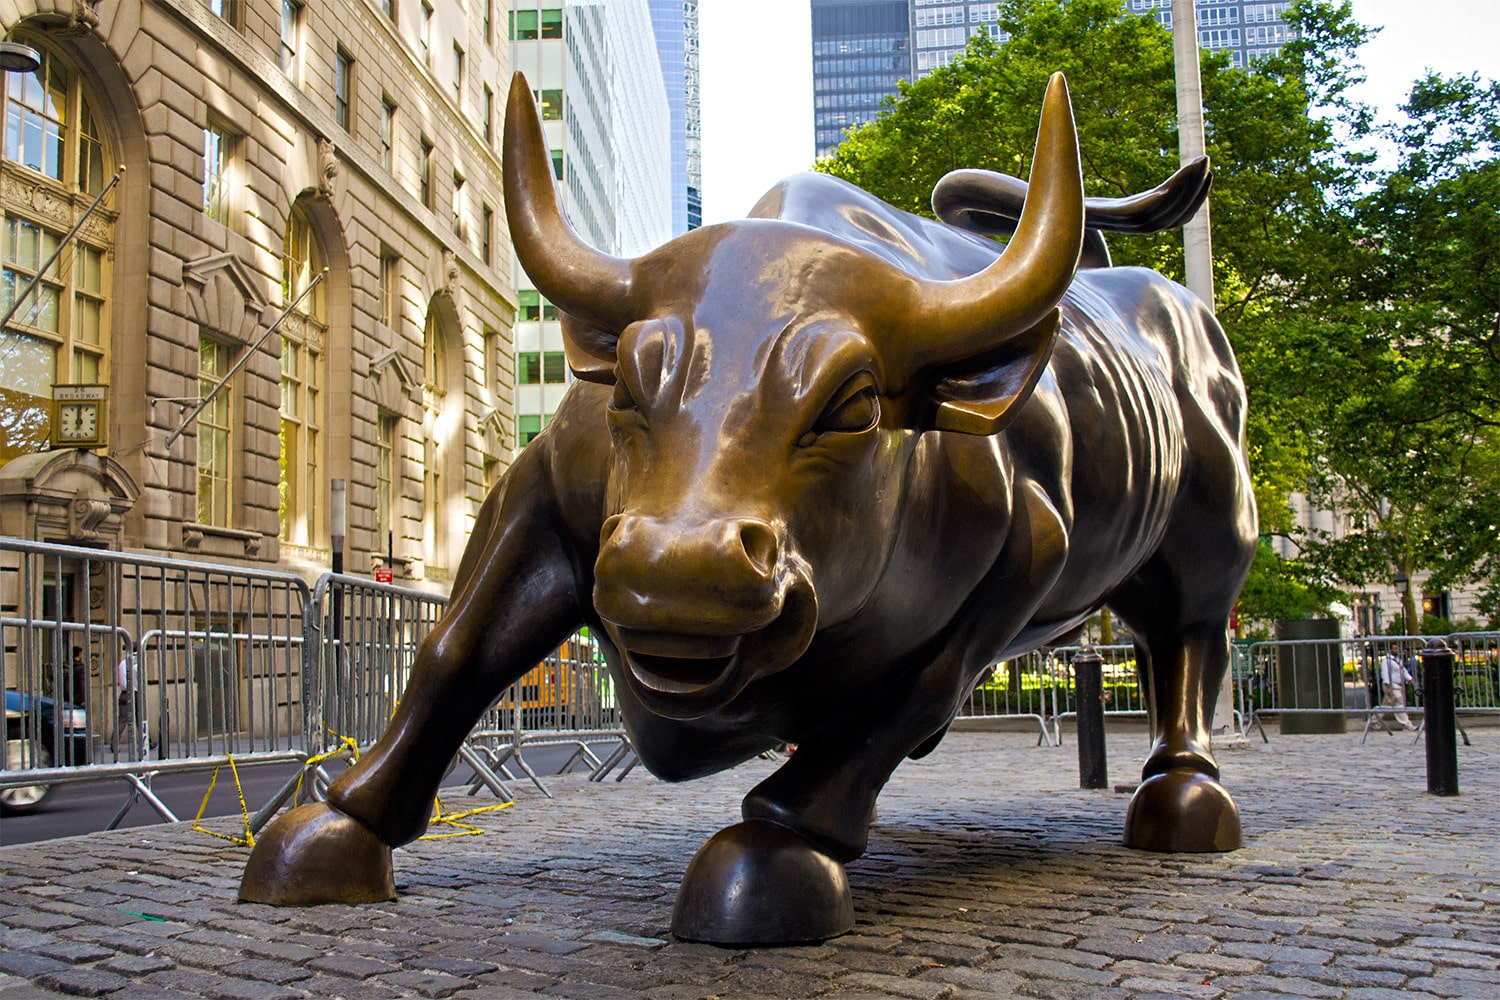 The bronze bull statue on Wall Street